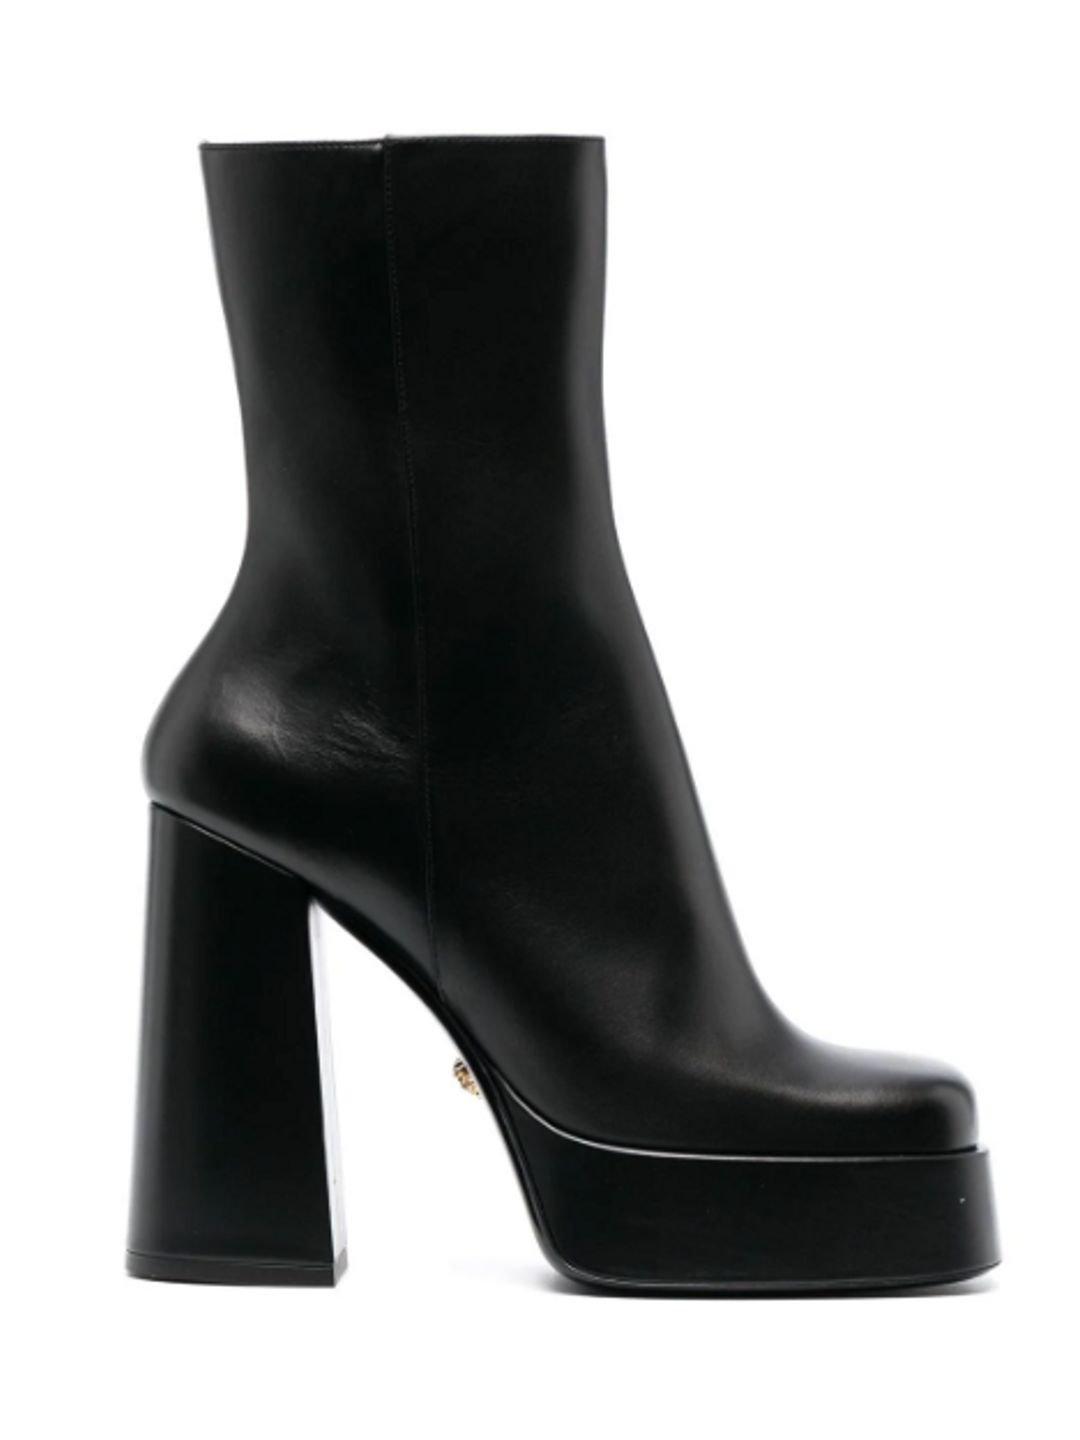 Best designer black boots: 7 chic styles to shop in 2023 | HELLO!